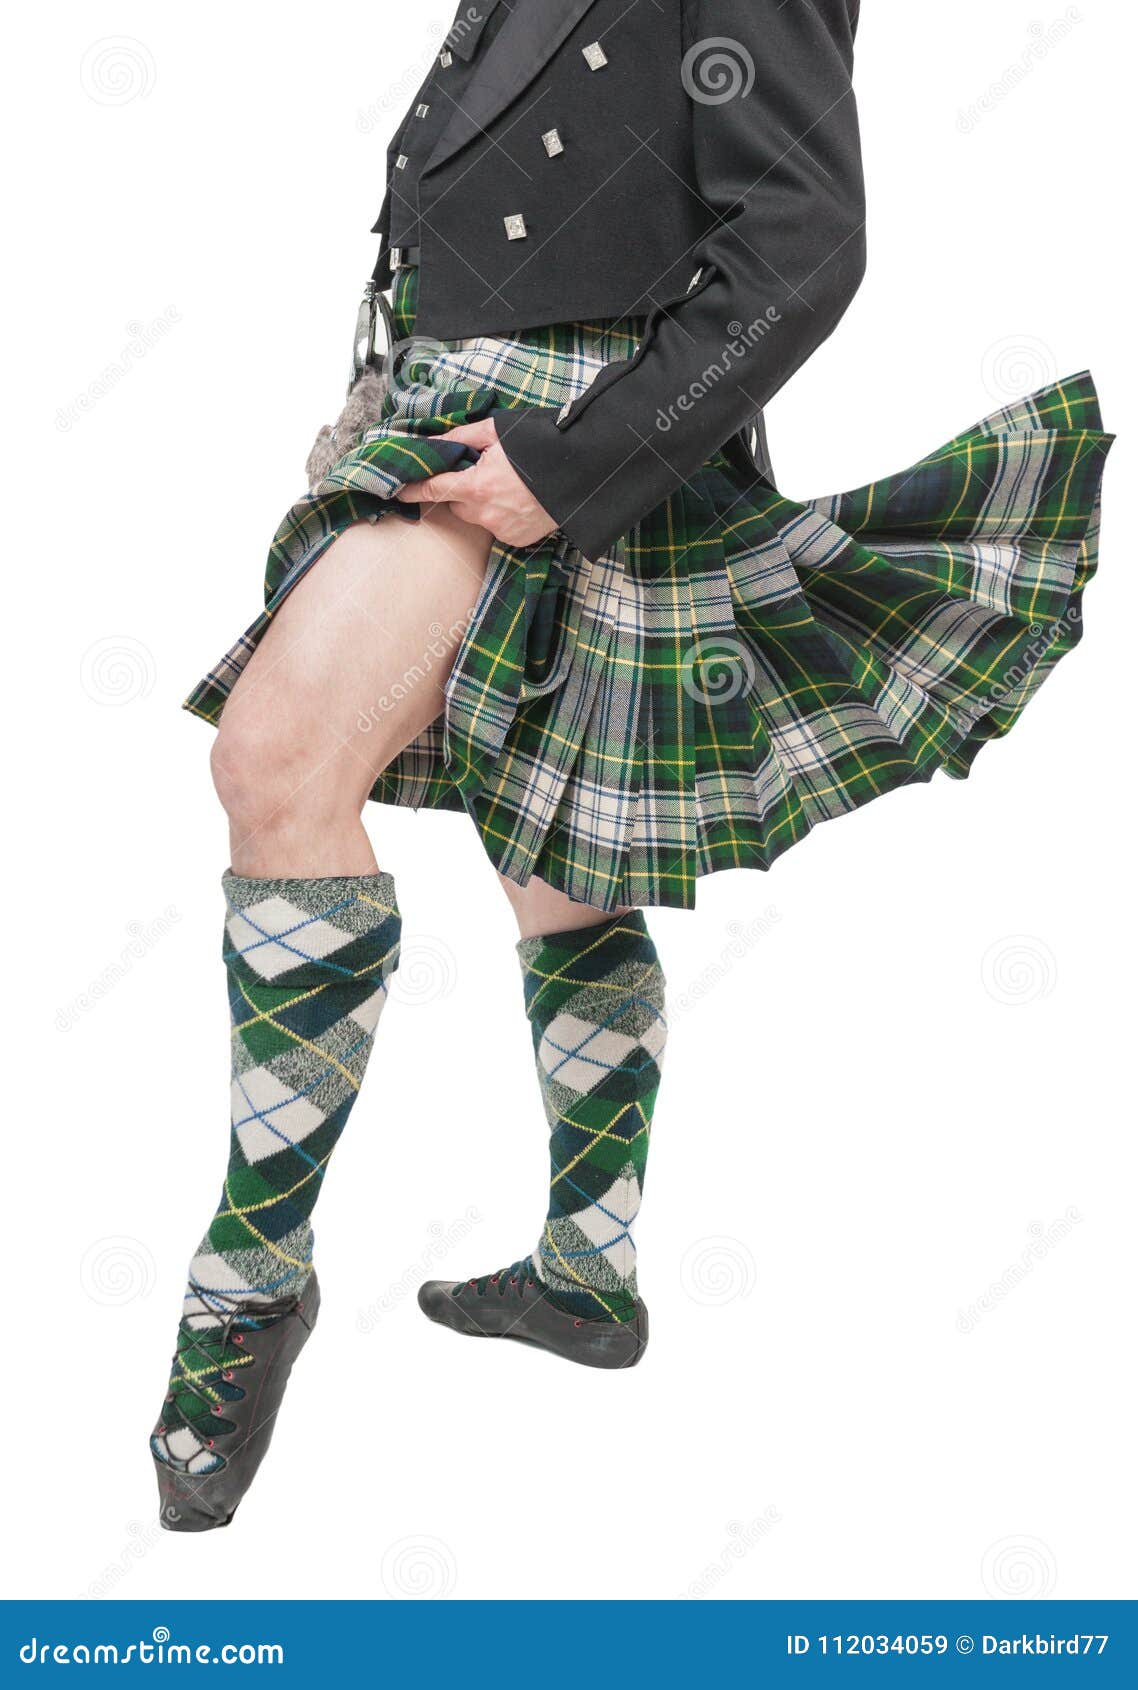 Best Escocés Hombre Royalty-Free Images, Stock Photos & Pictures